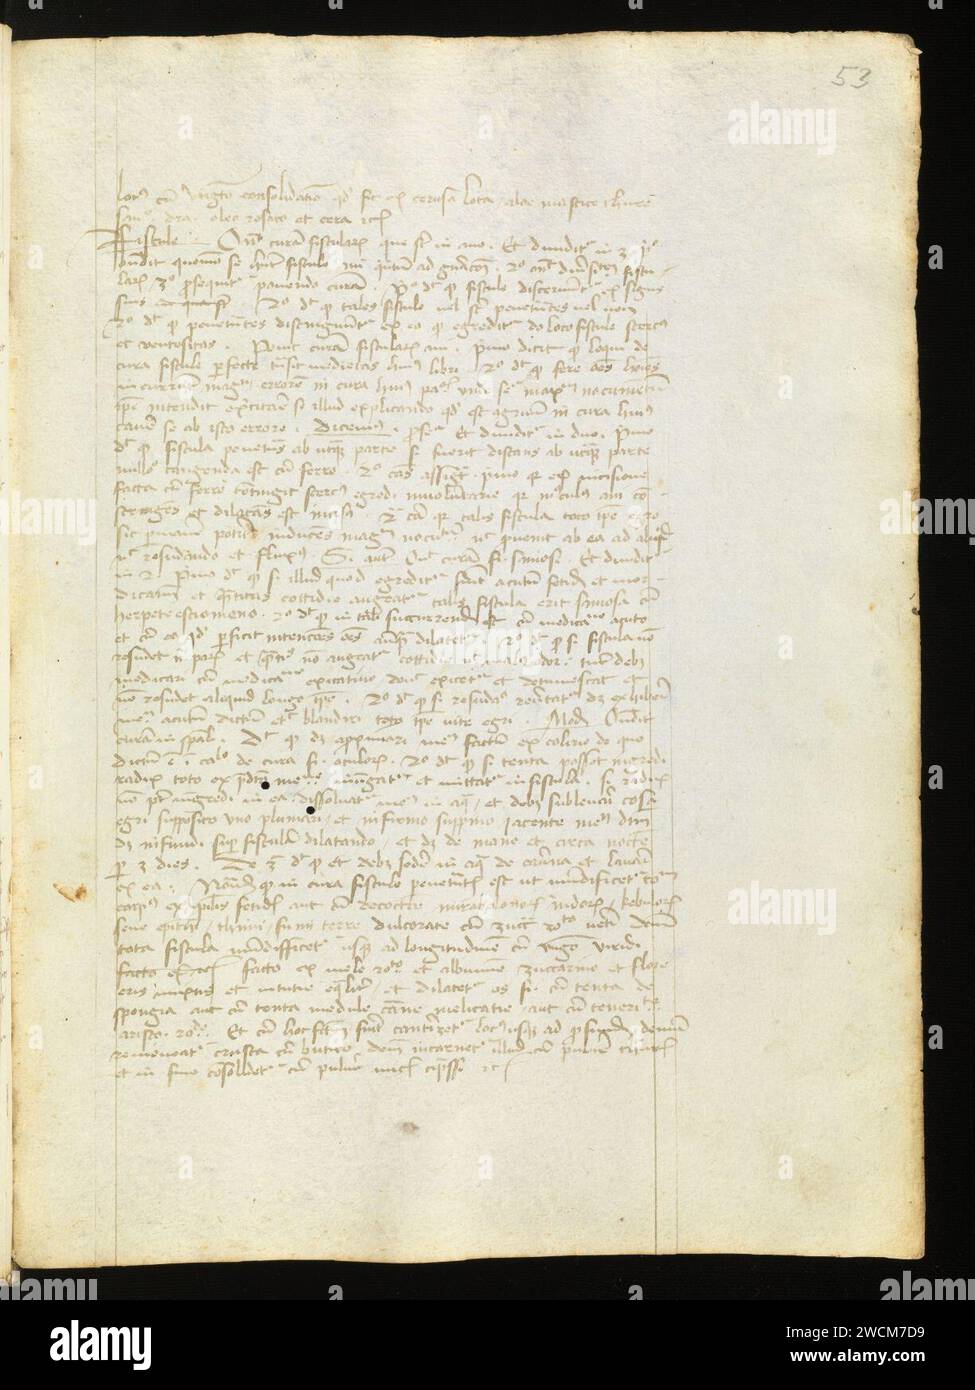 Aarau, Aargauer Kantonsbibliothek, MsMurF 85, F. 2 0053r – Antonius Guainerius, Tractatus medicinales. Banque D'Images